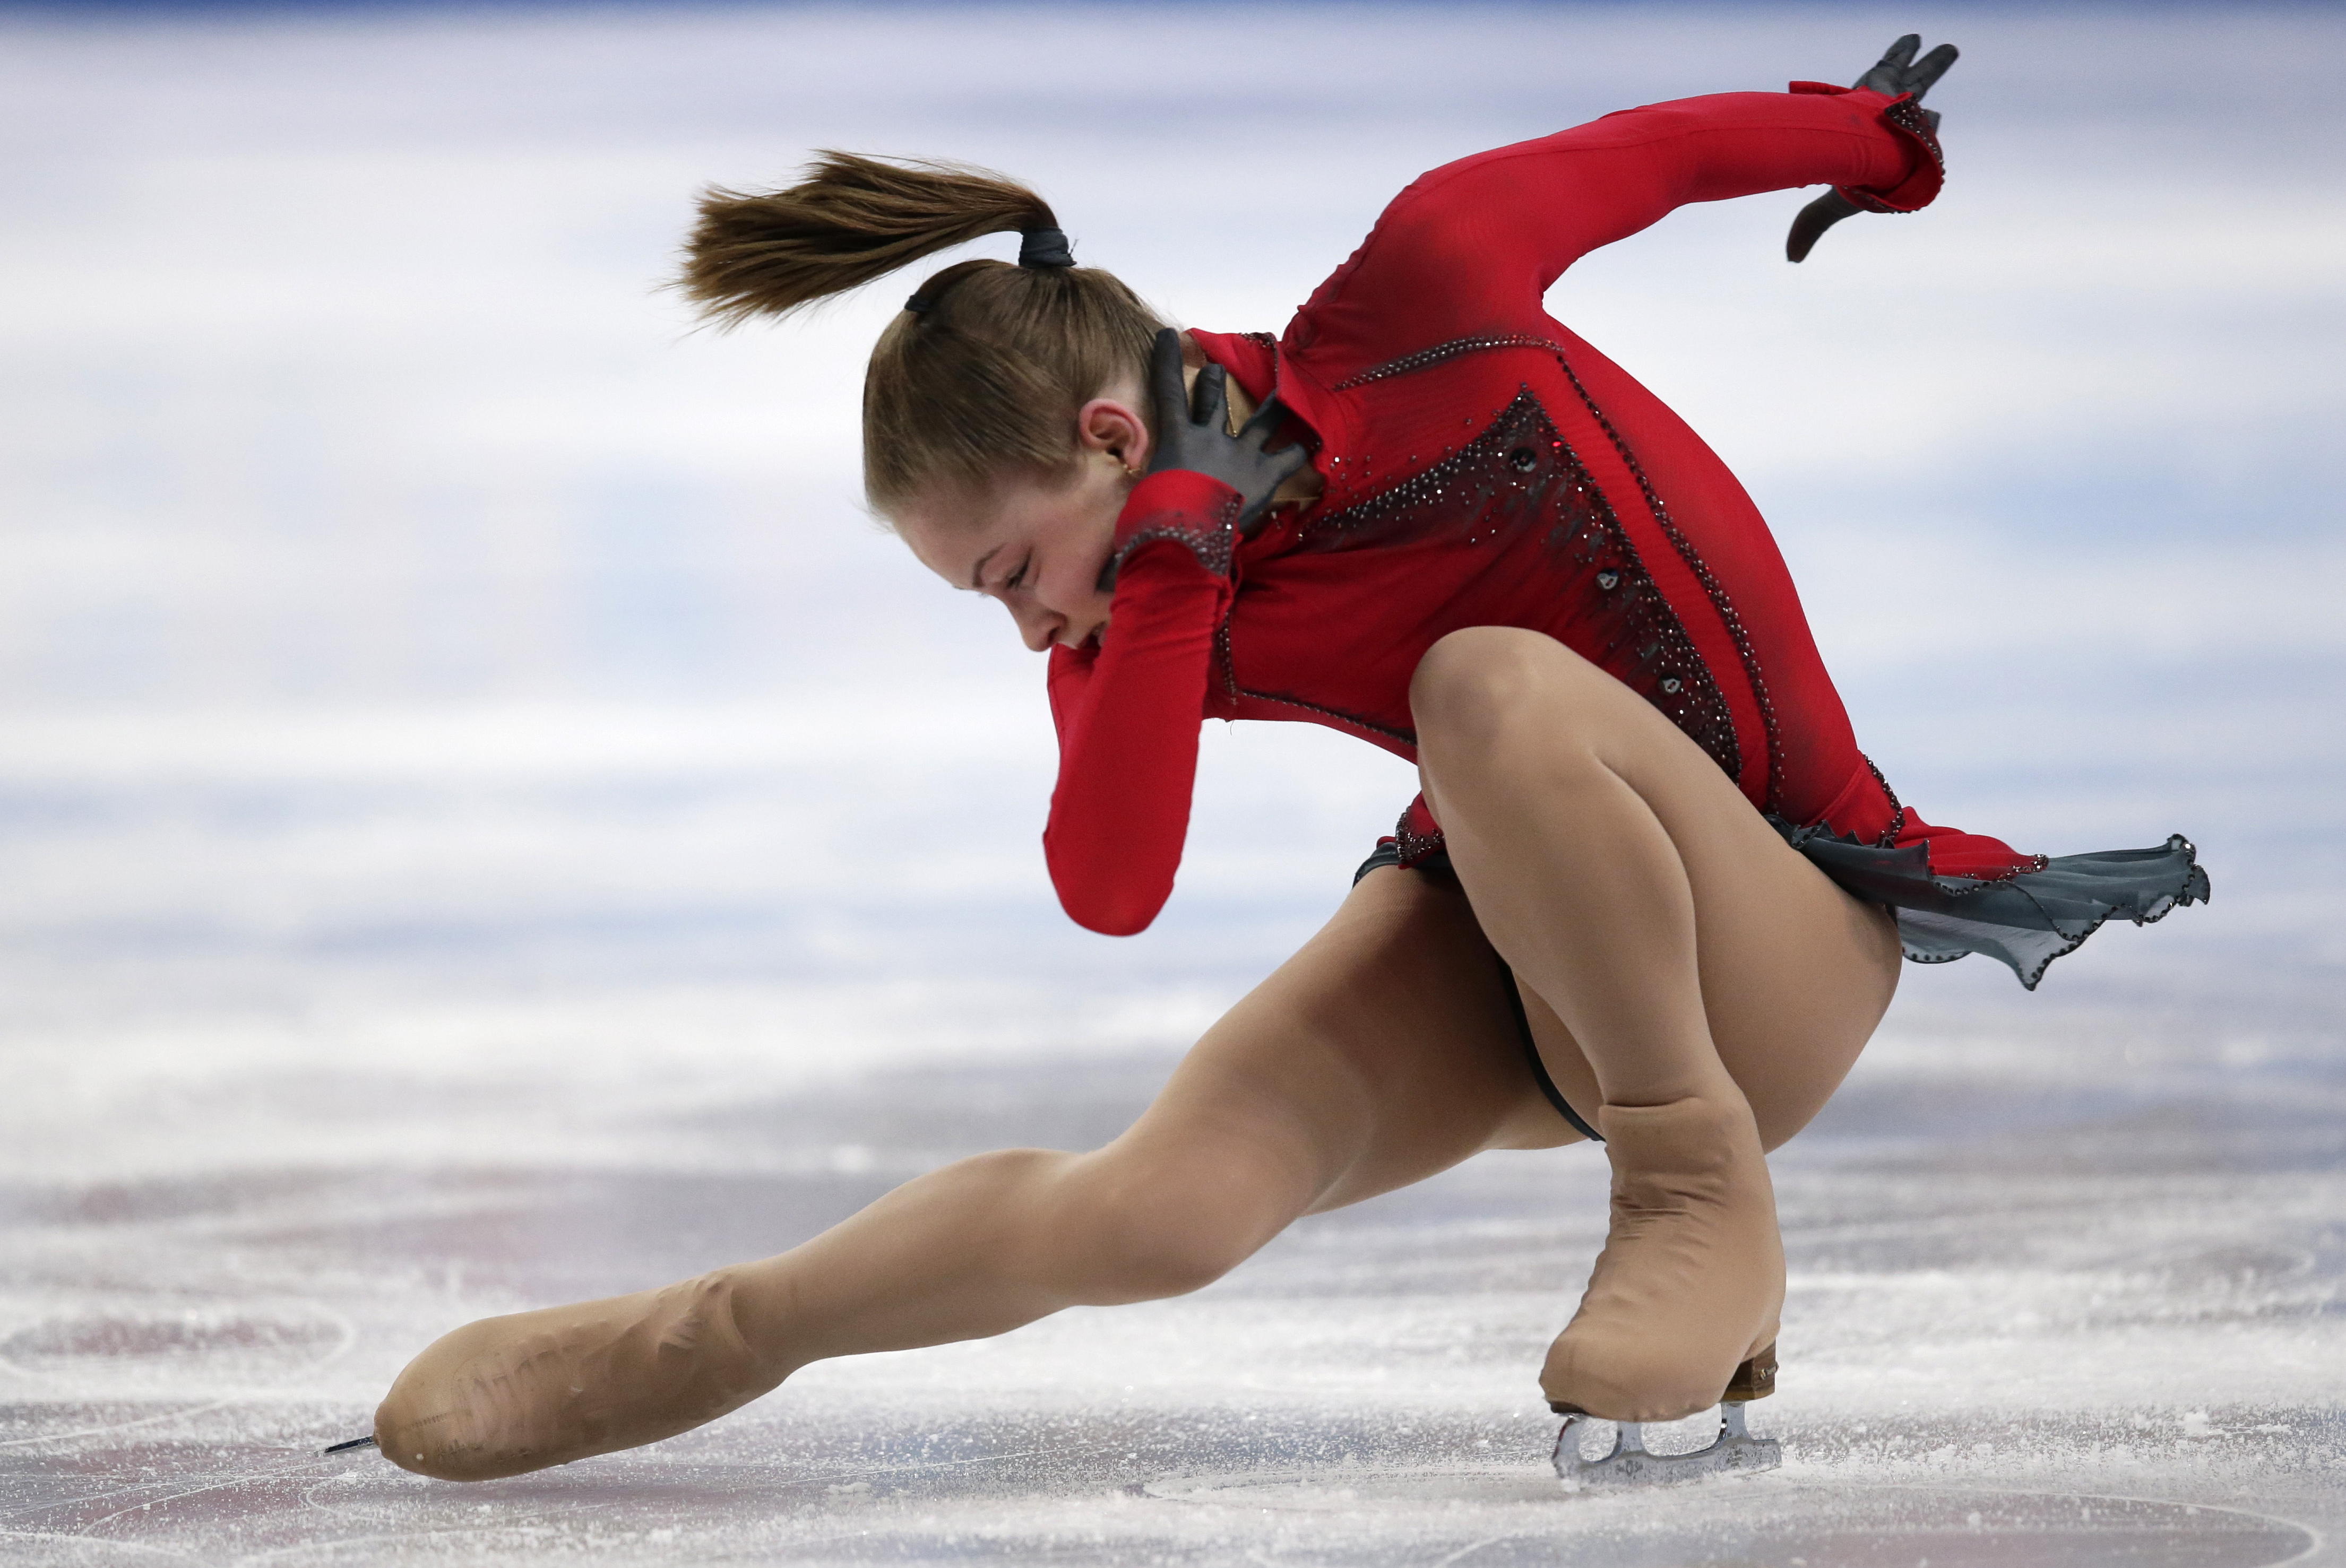 Women's Figure Skating Olympics 2014: Schedule, Prediction for Short Program | Bleacher Report